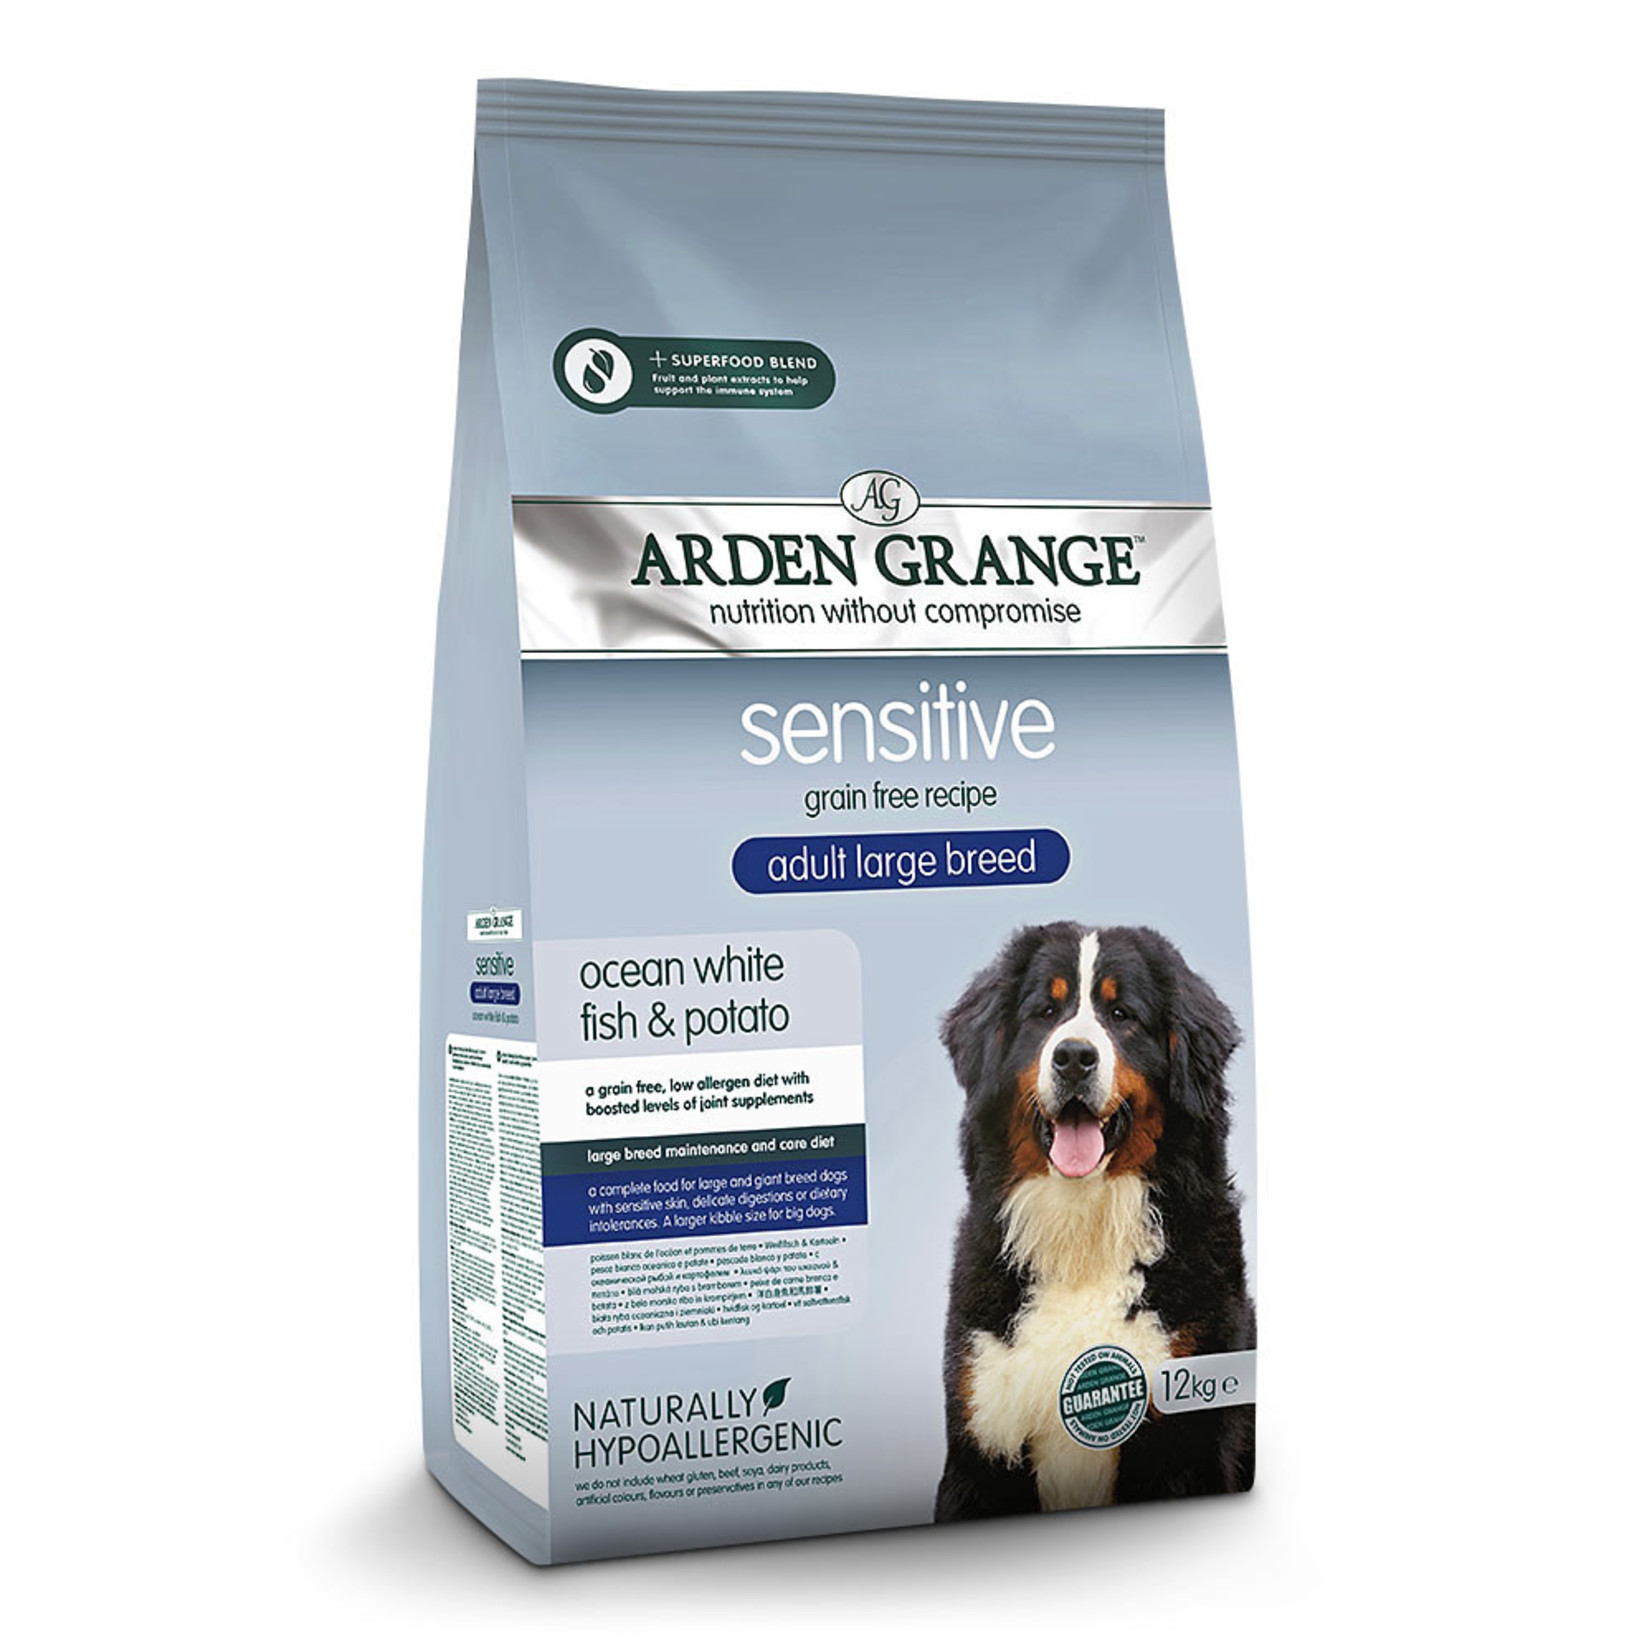 Arden Grange Sensitive Adult Large Breed Dog Dry Food, Ocean White Fish & Potato